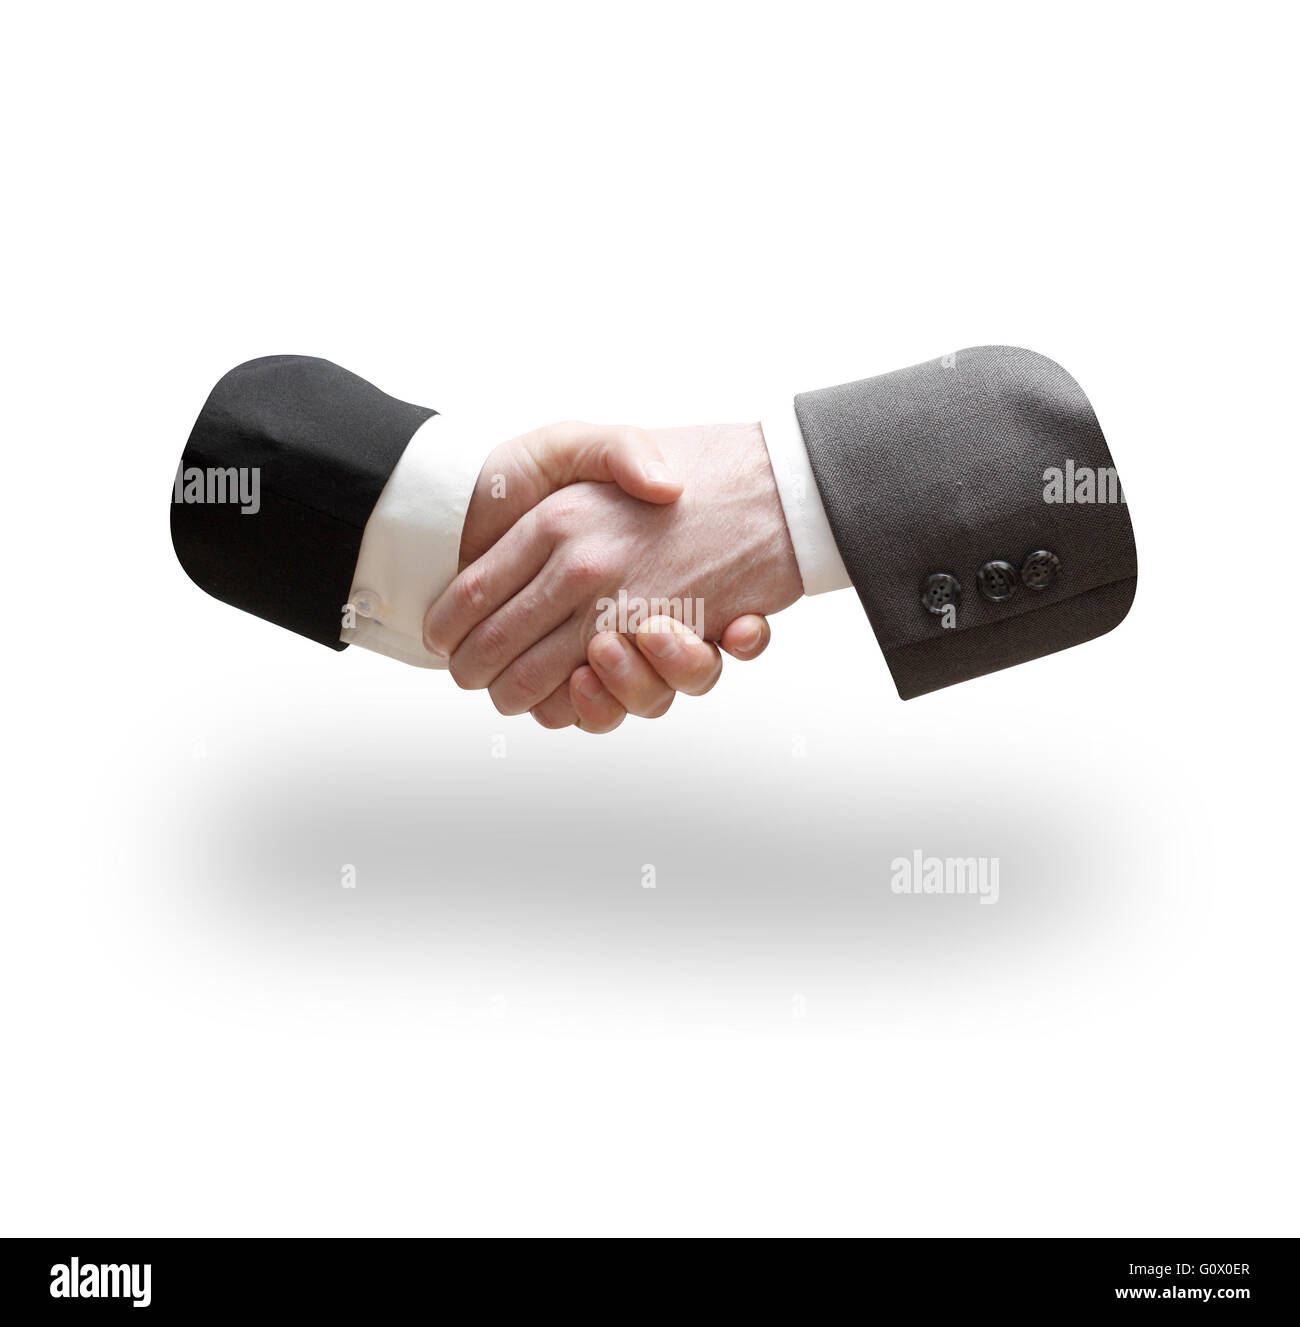 Zwei Geschäftsleute Händeschütteln Stockfoto